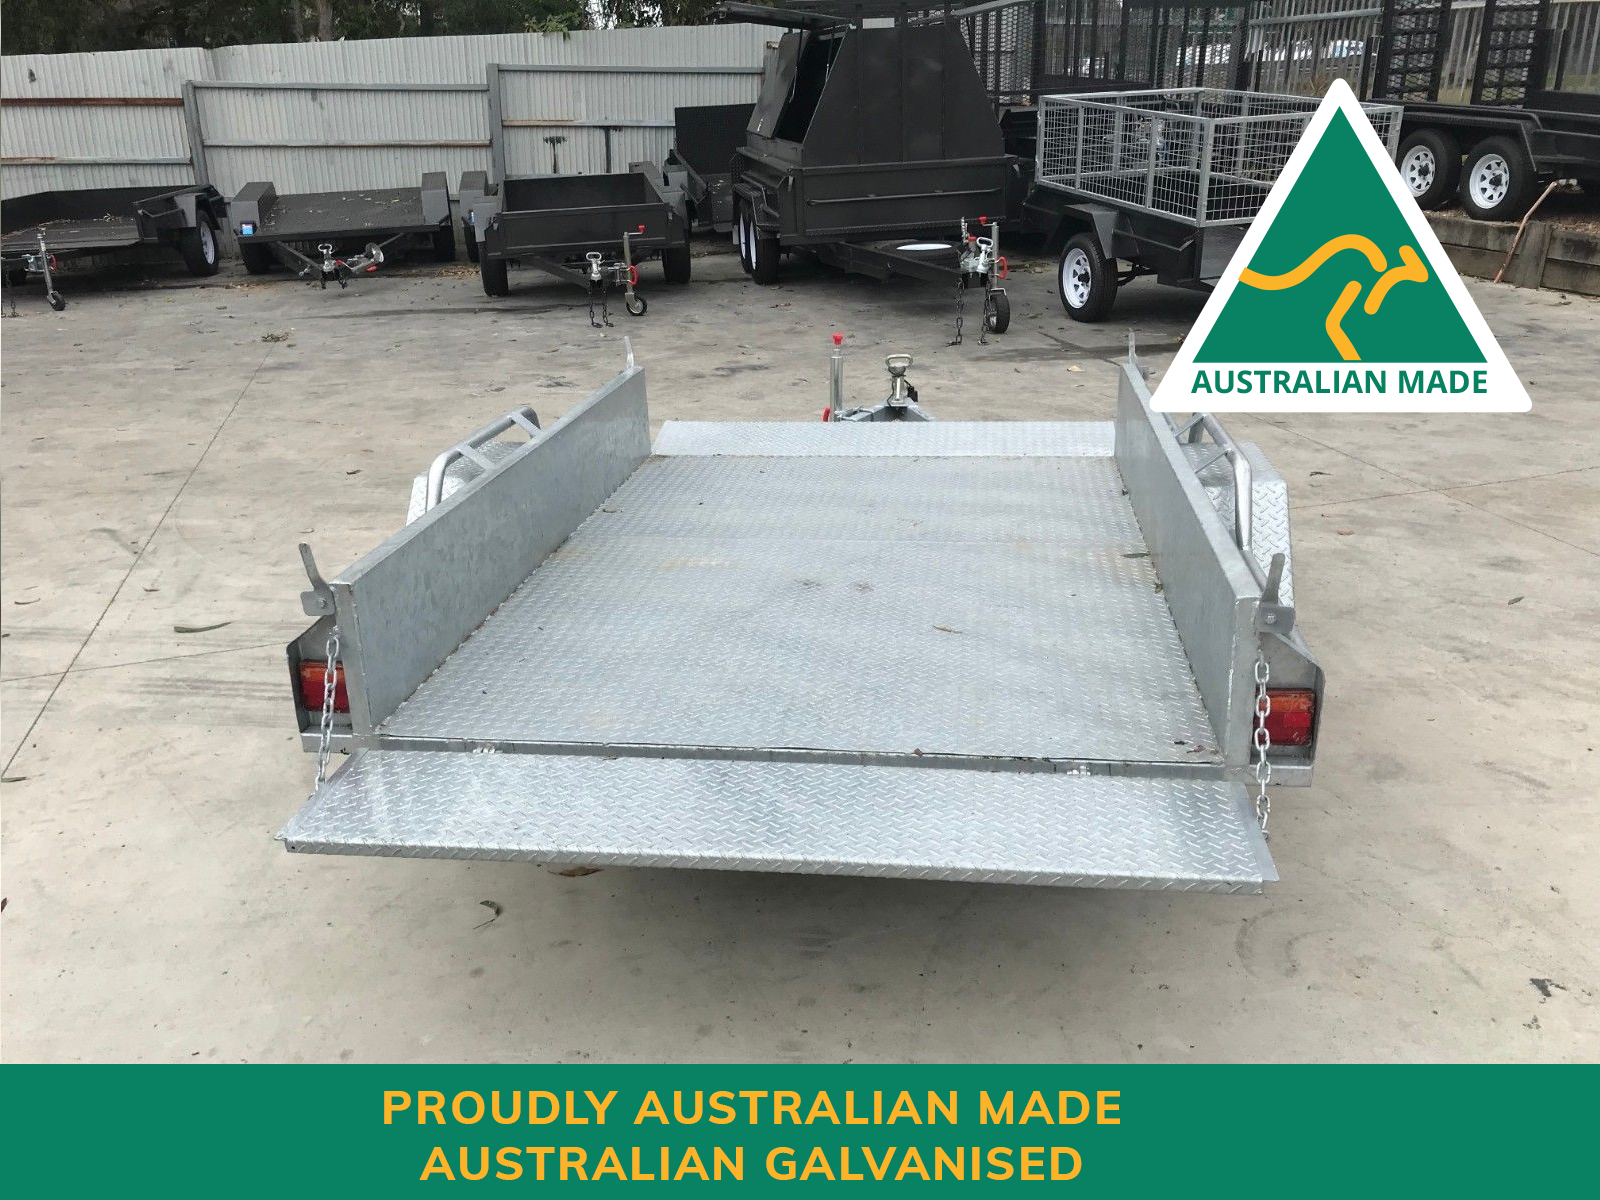 7×5 Australain Made Australian Galvanised Single Axle Heavy Duty Box Trailer For Sale<br><br><span class="aussie-build">Australian Made Trailer</span>